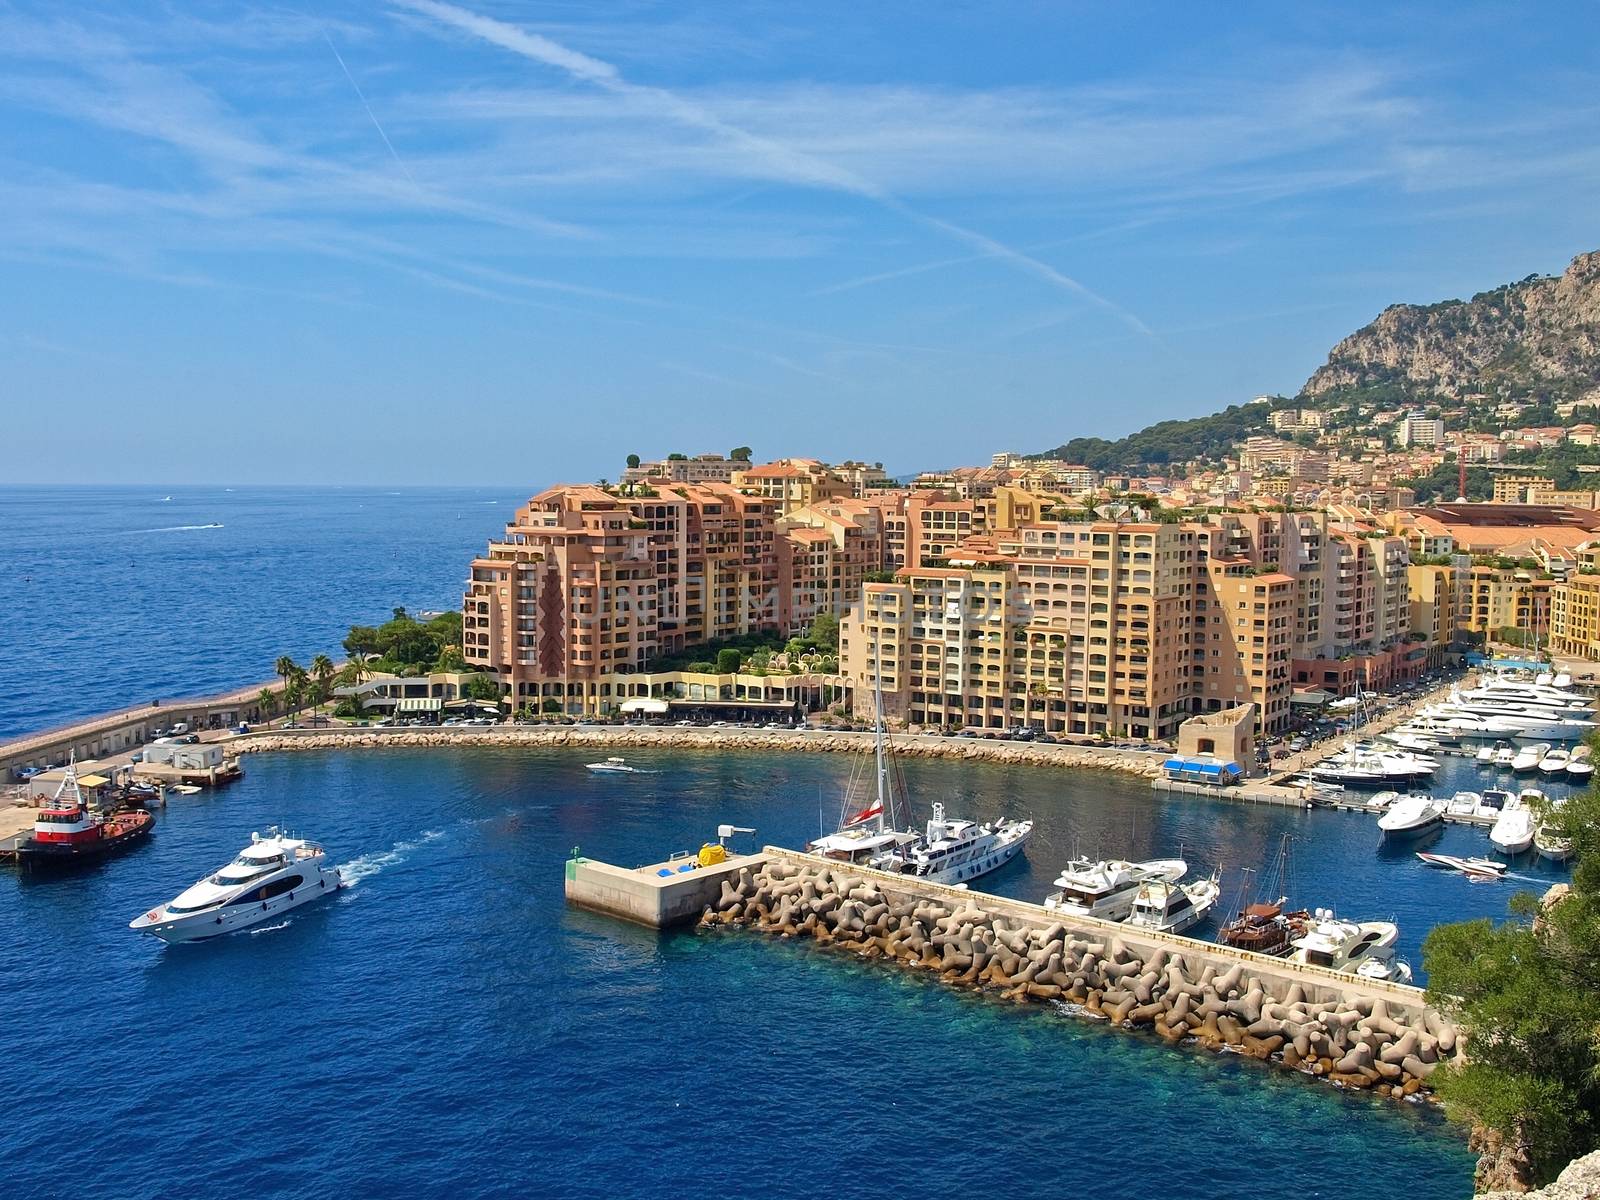 Monte Carlo port by Venakr